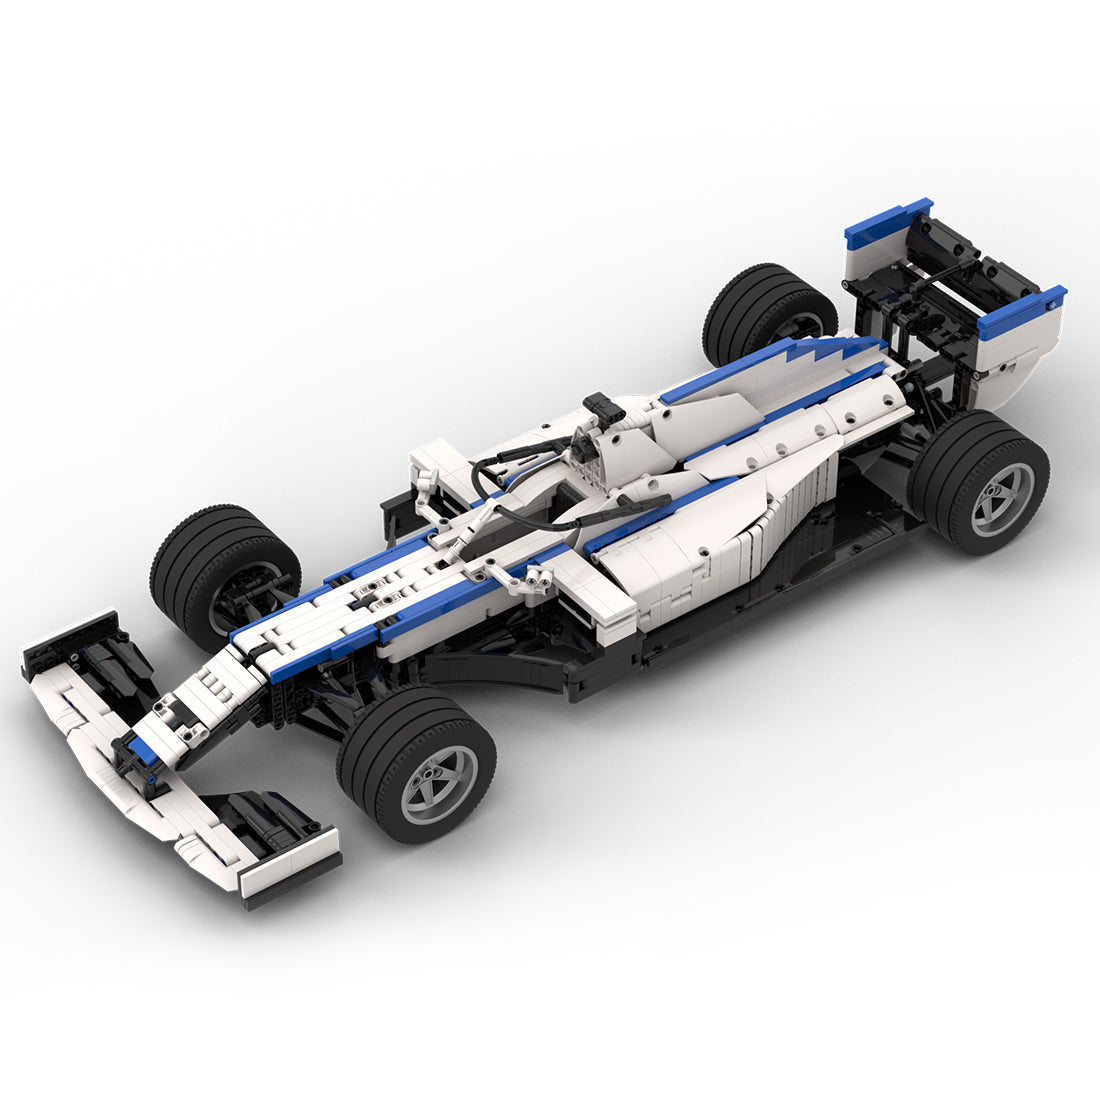 MOC-47392 FW43 1/8 Scale Formula Racing Car